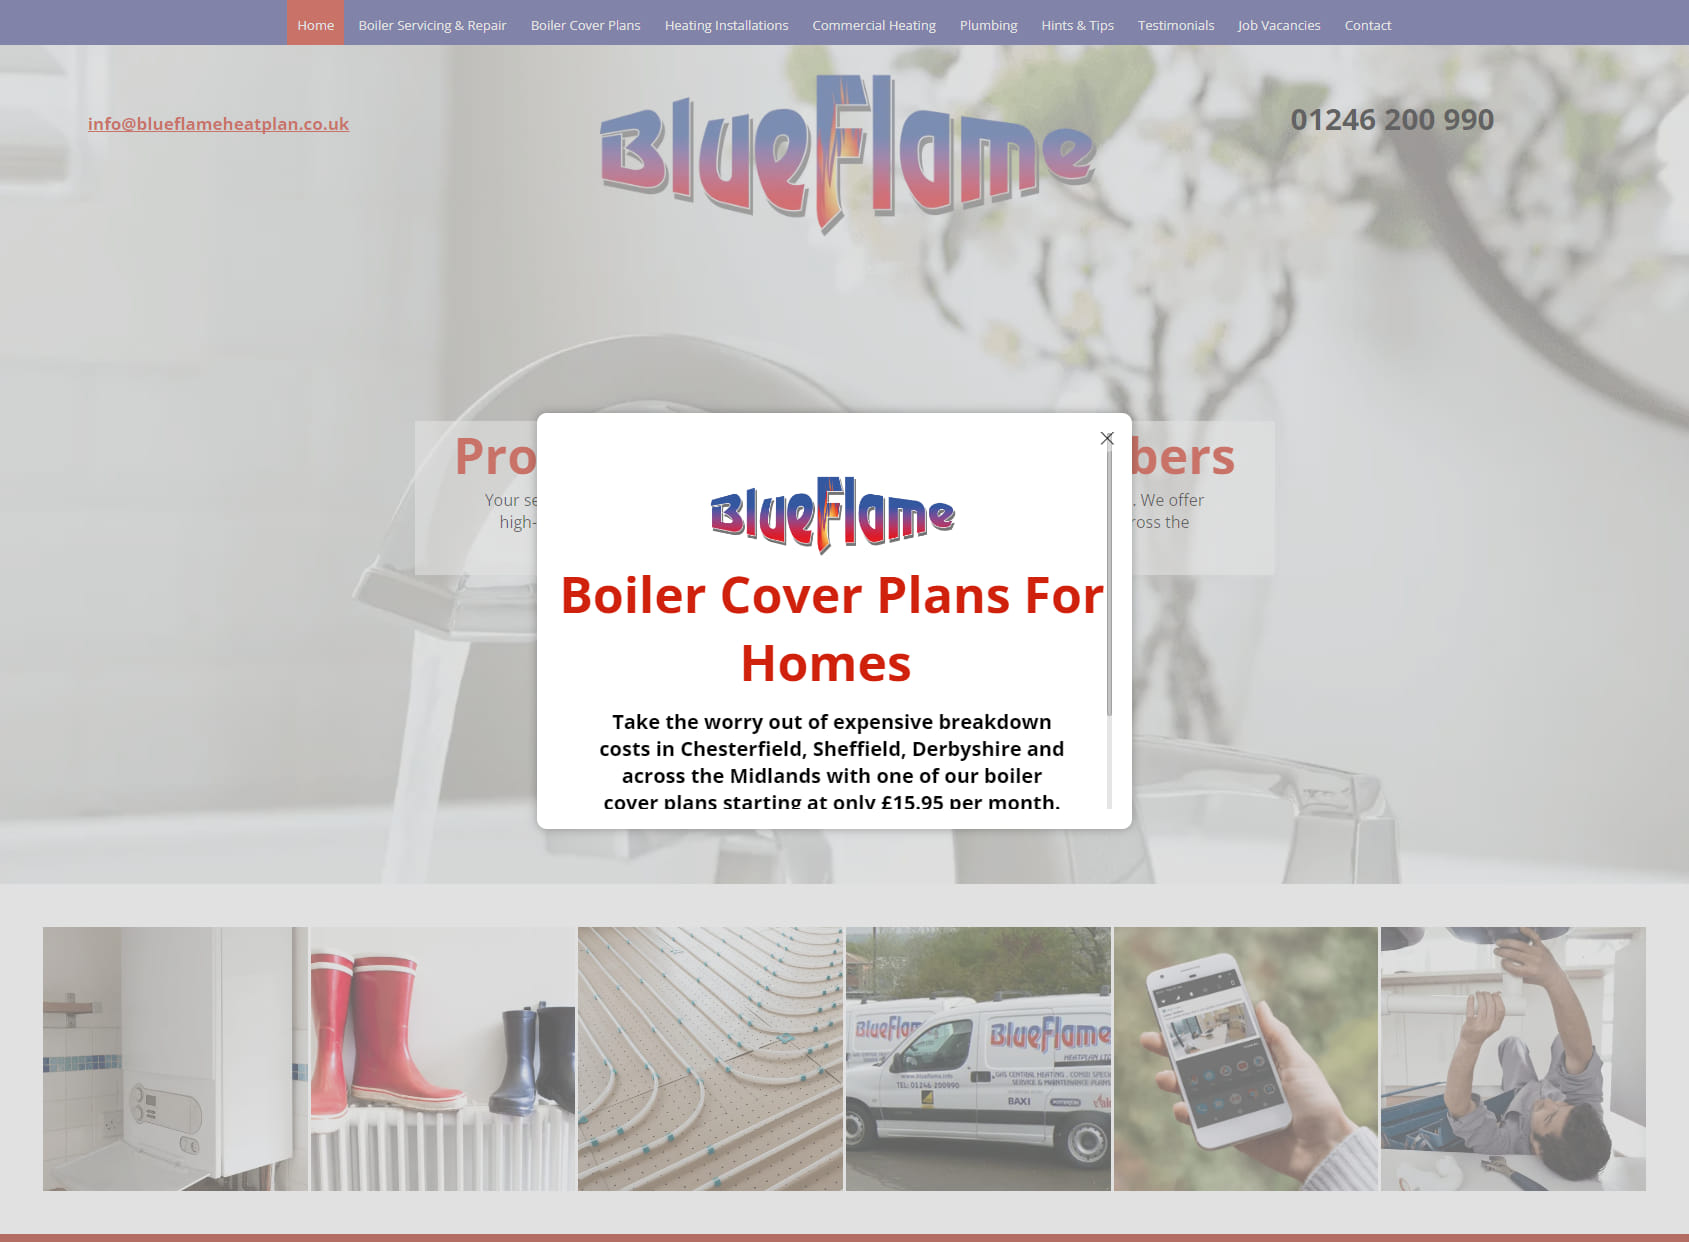 Blueflame Heatplan Ltd